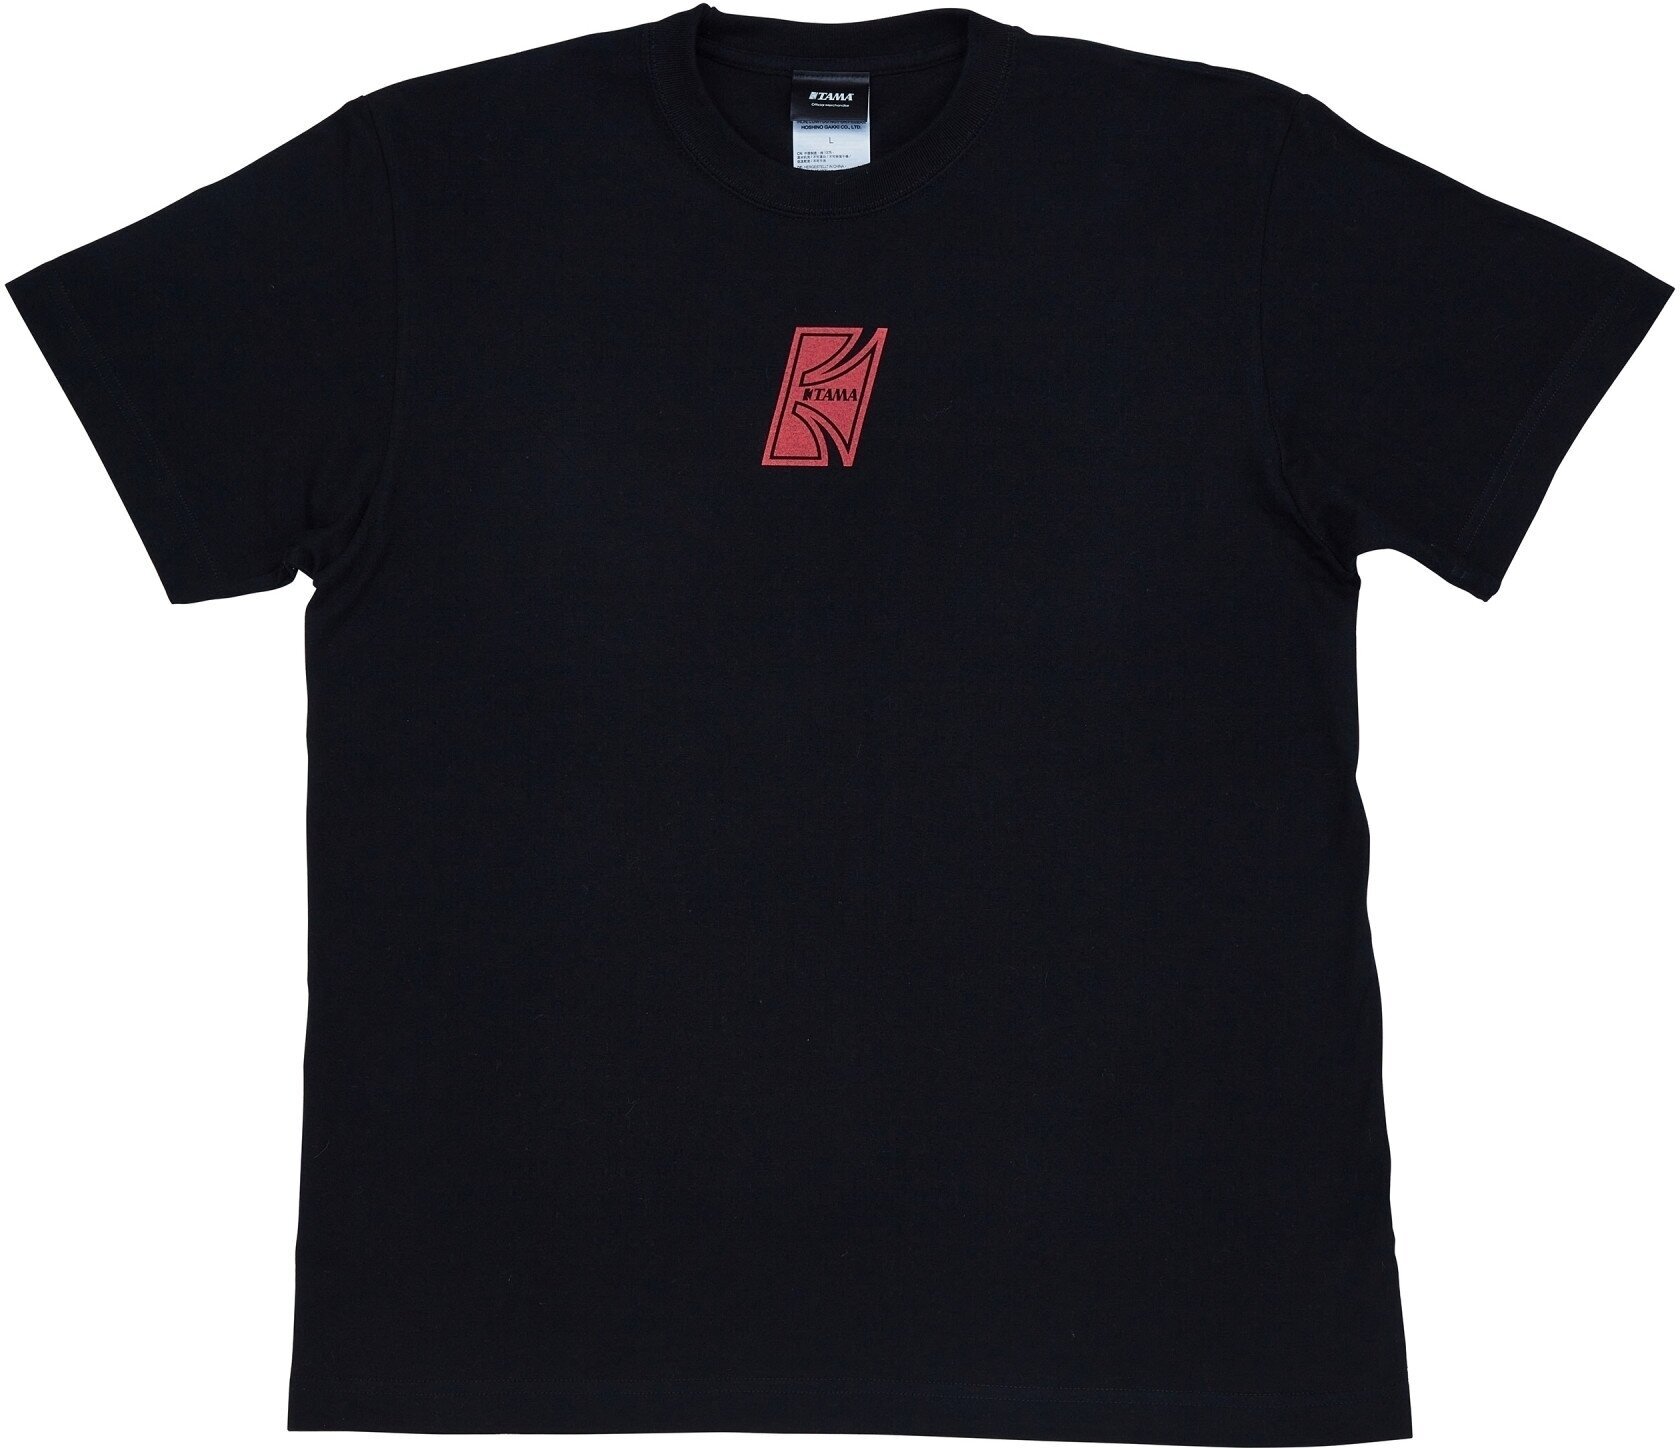 Shirt Tama Shirt TAMT006S Unisex Black S